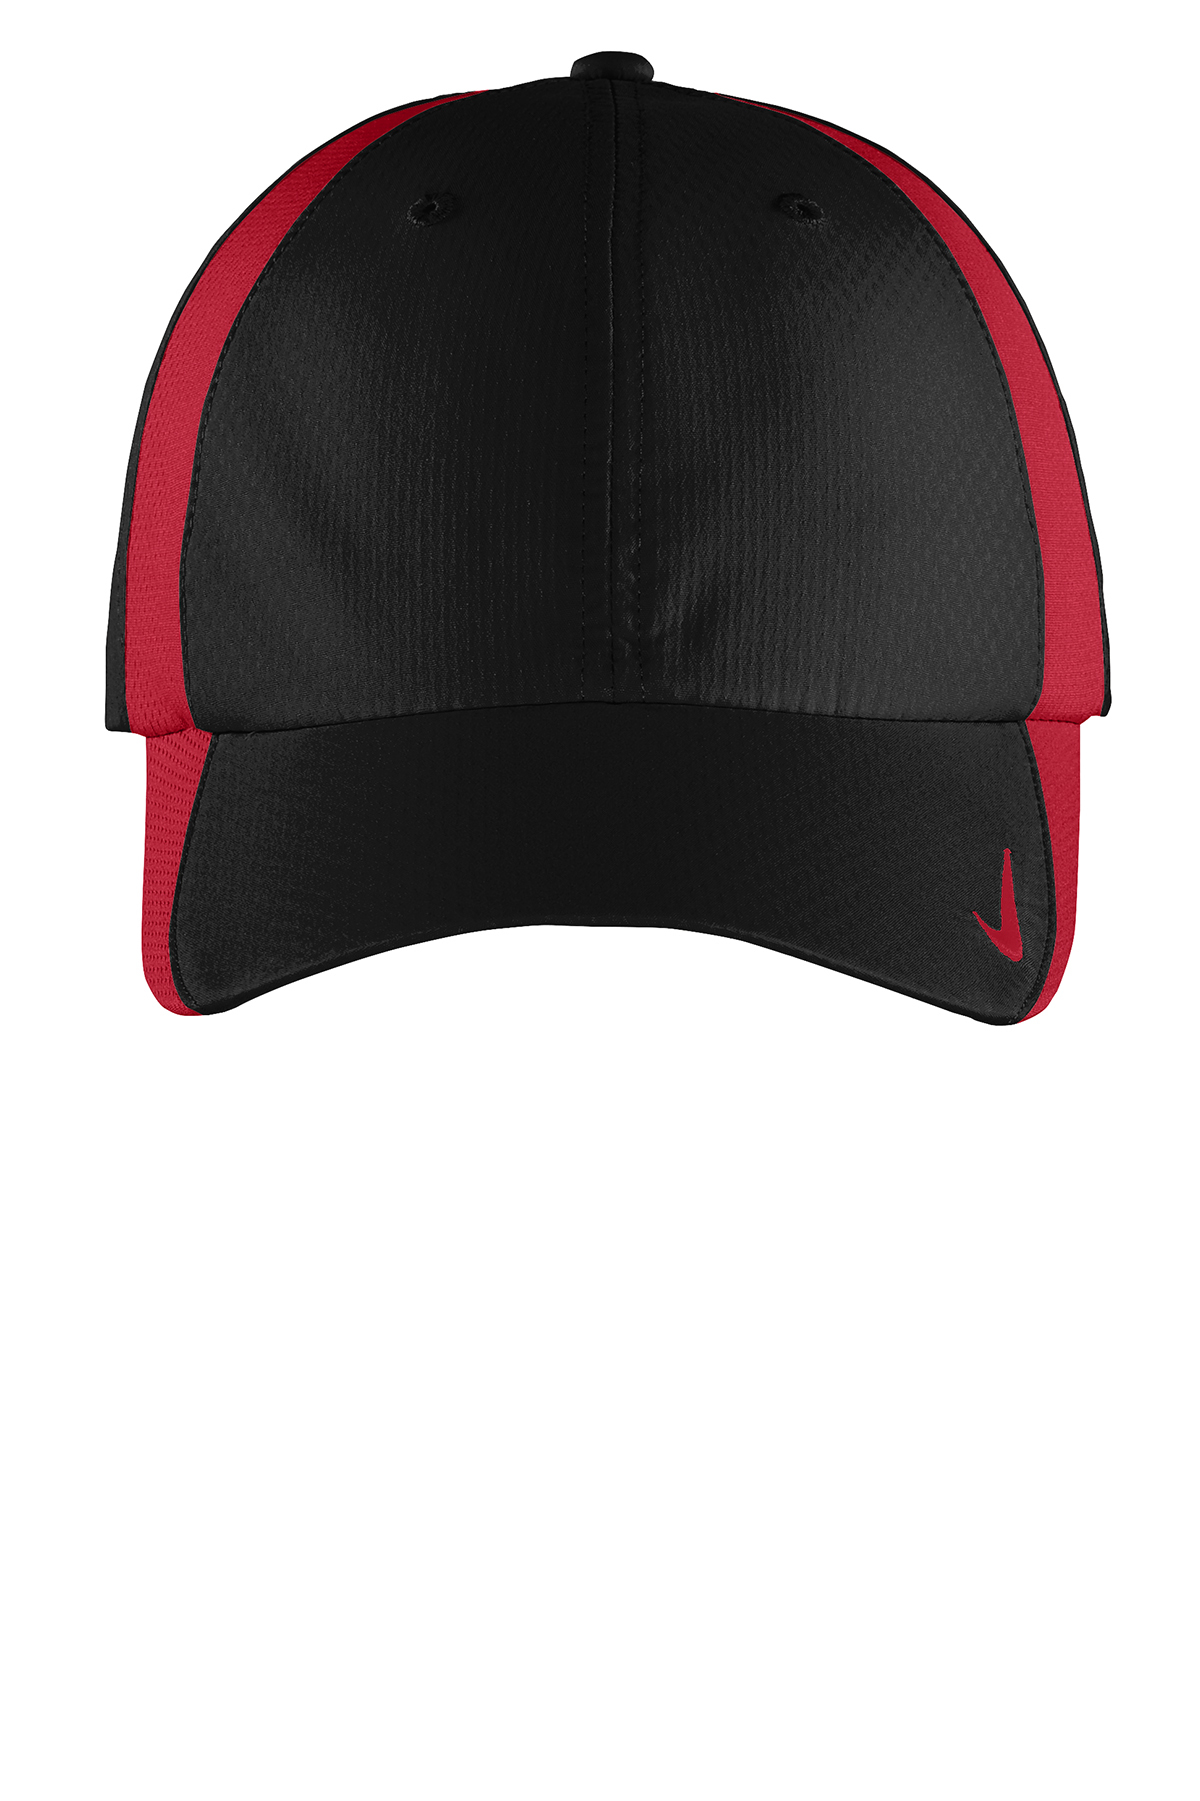 Nike Sphere Dry Cap. 247077 - Logo Shirts Direct